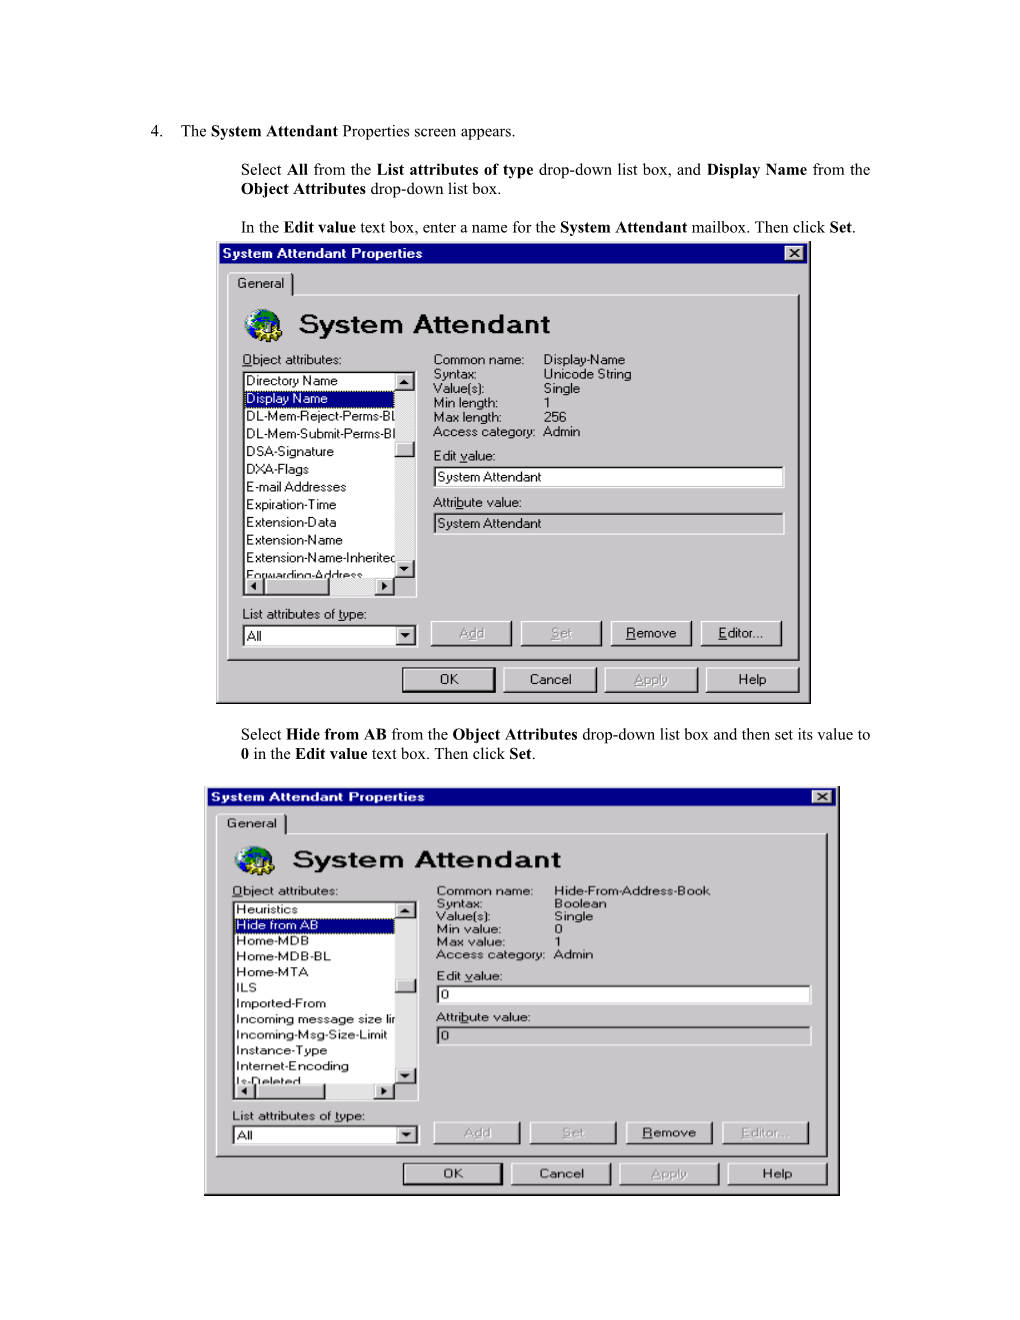 Enabling Public Folder Scanning/Configuring System Attendant Profile